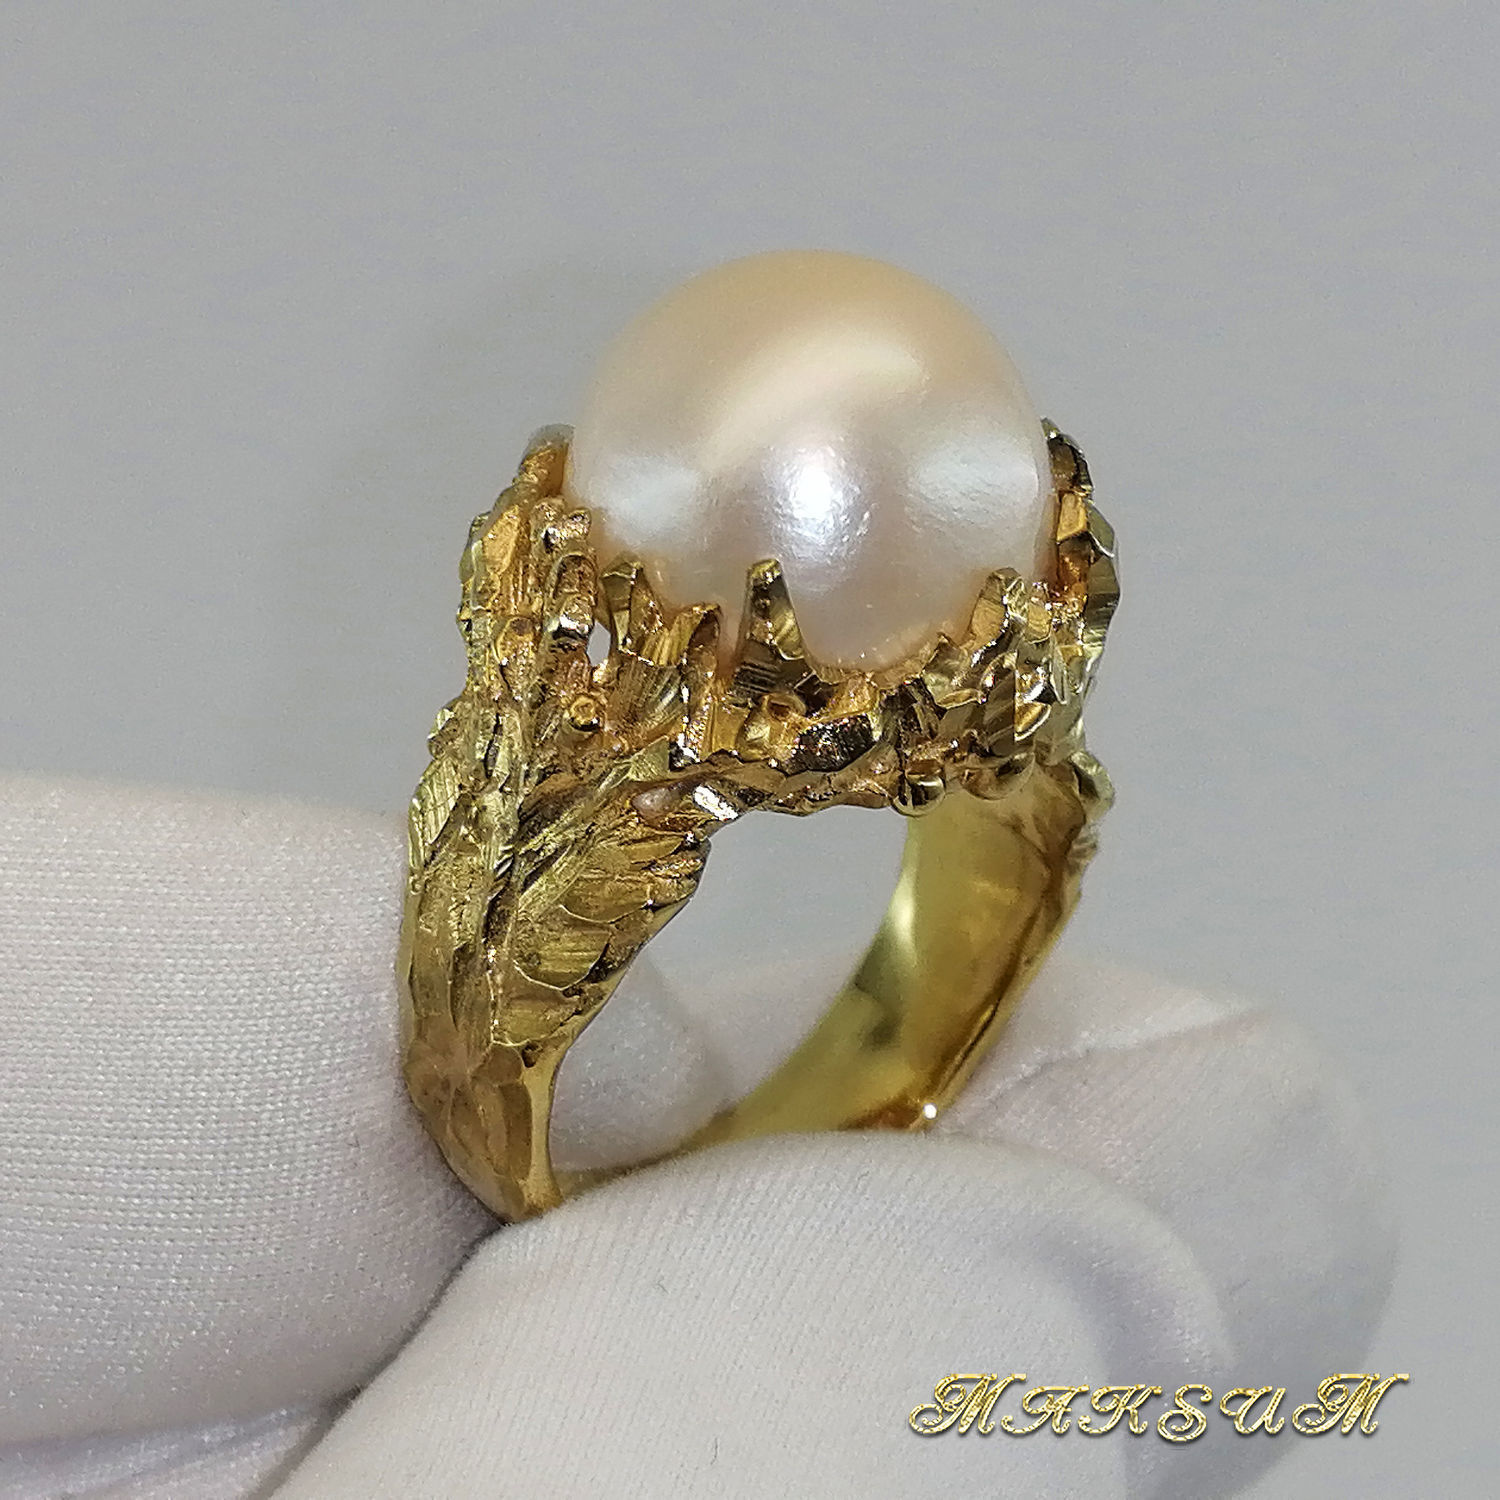 Ring 'Big pearl - white' silver925, pearl, gilding. VIDEO, Rings, St. Petersburg,  Фото №1